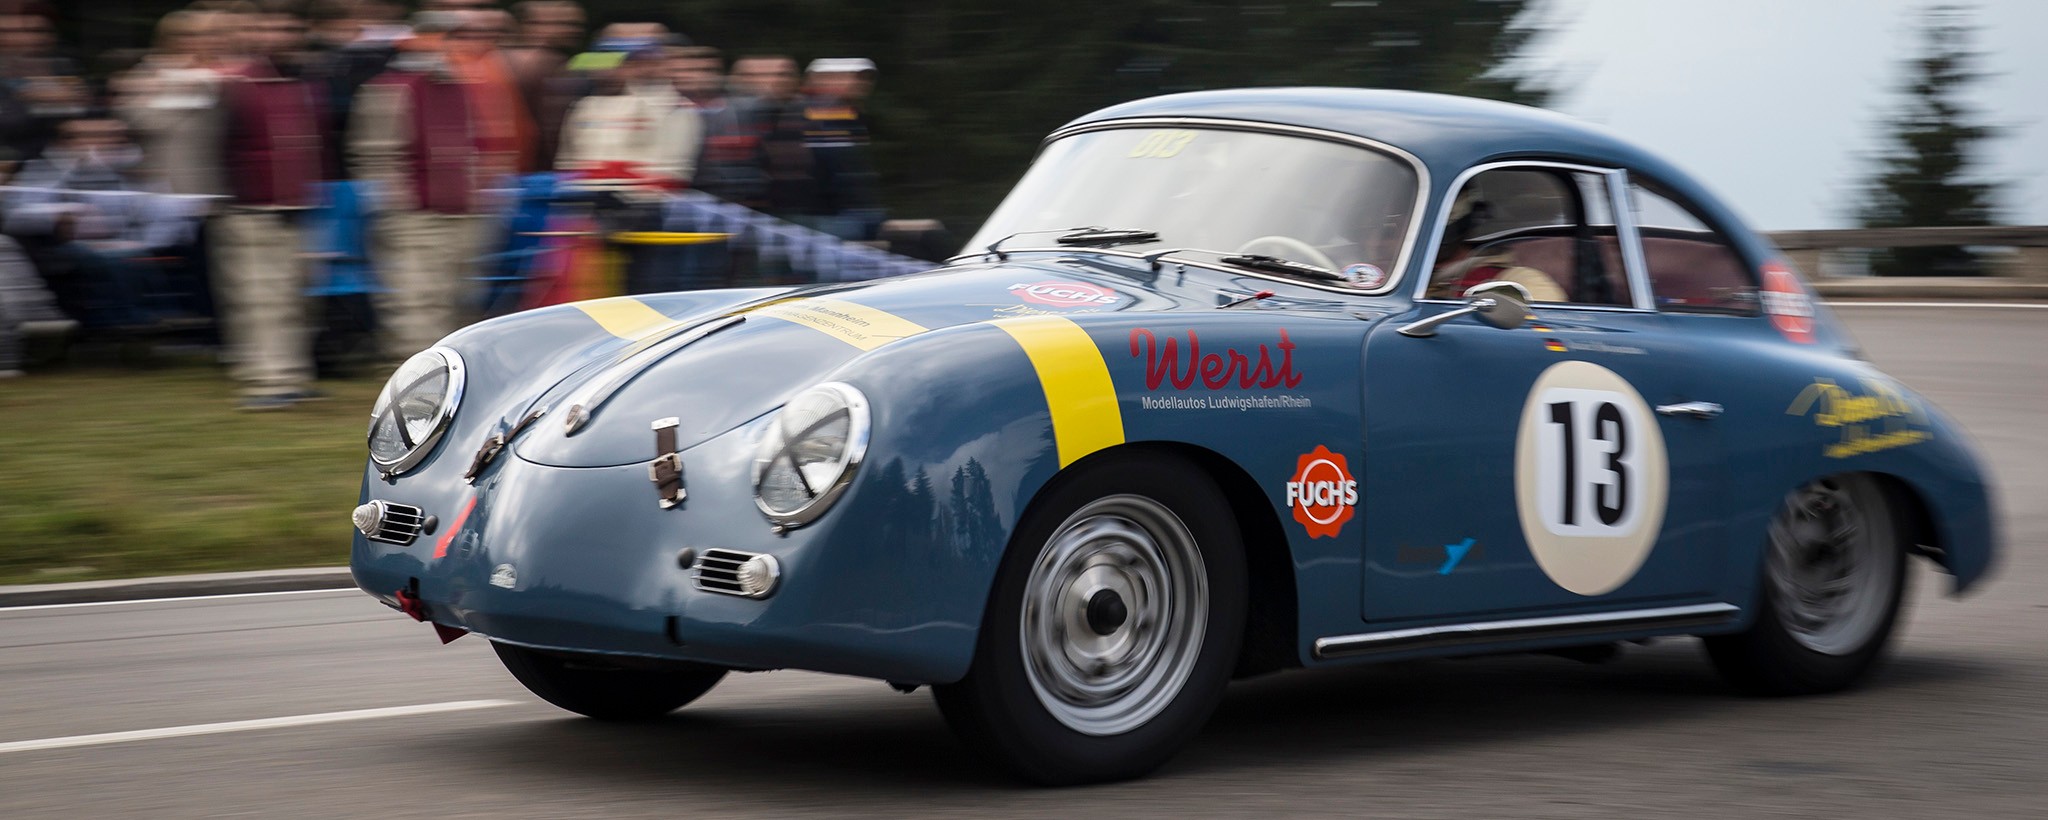 75 Years of Porsche